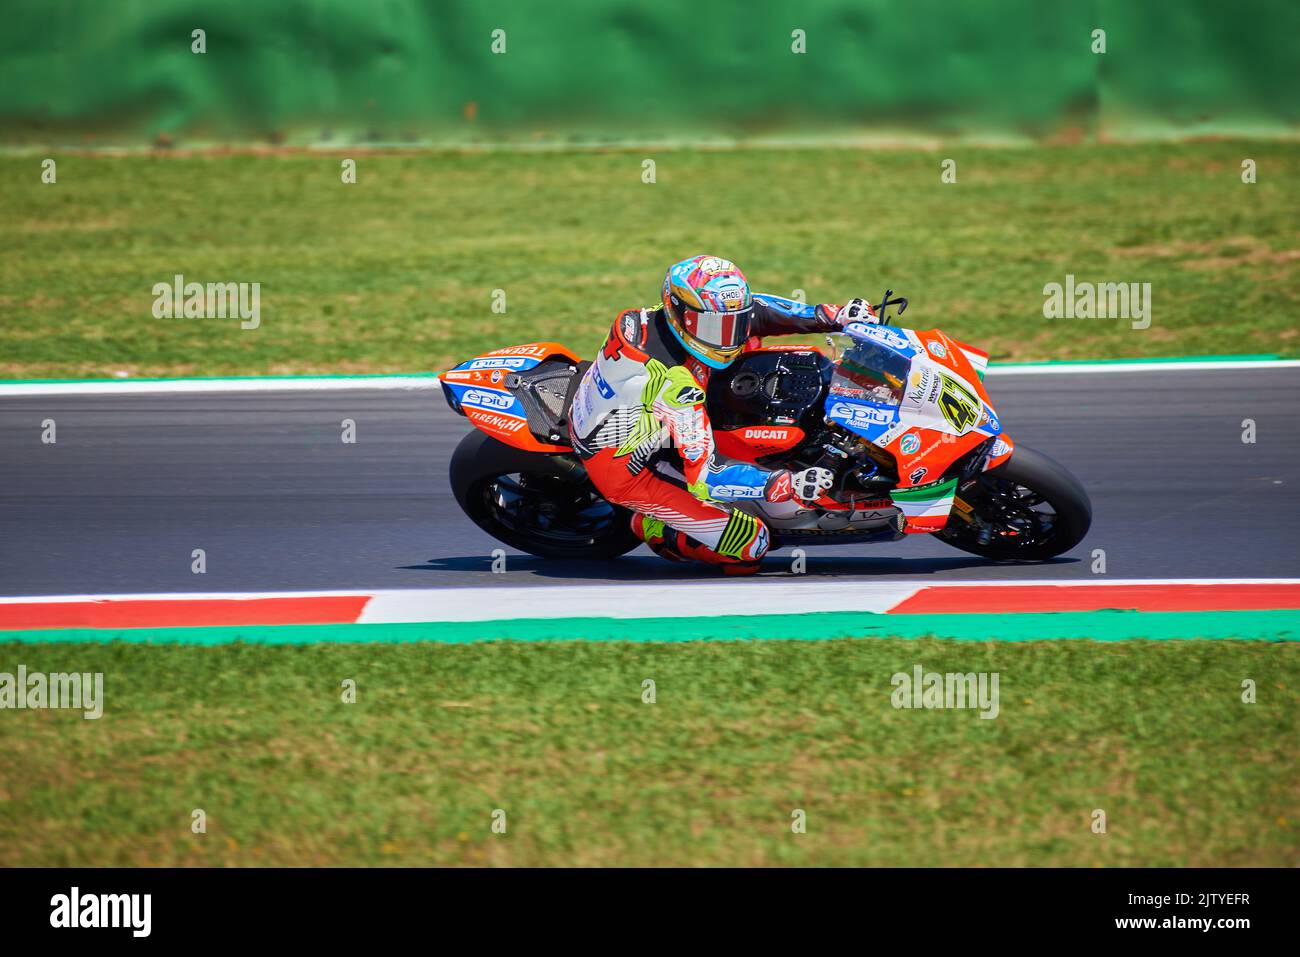 Axel Bassani during day Race of the Motul Fim Superbike Championship 2021 at Misano Stock Photo